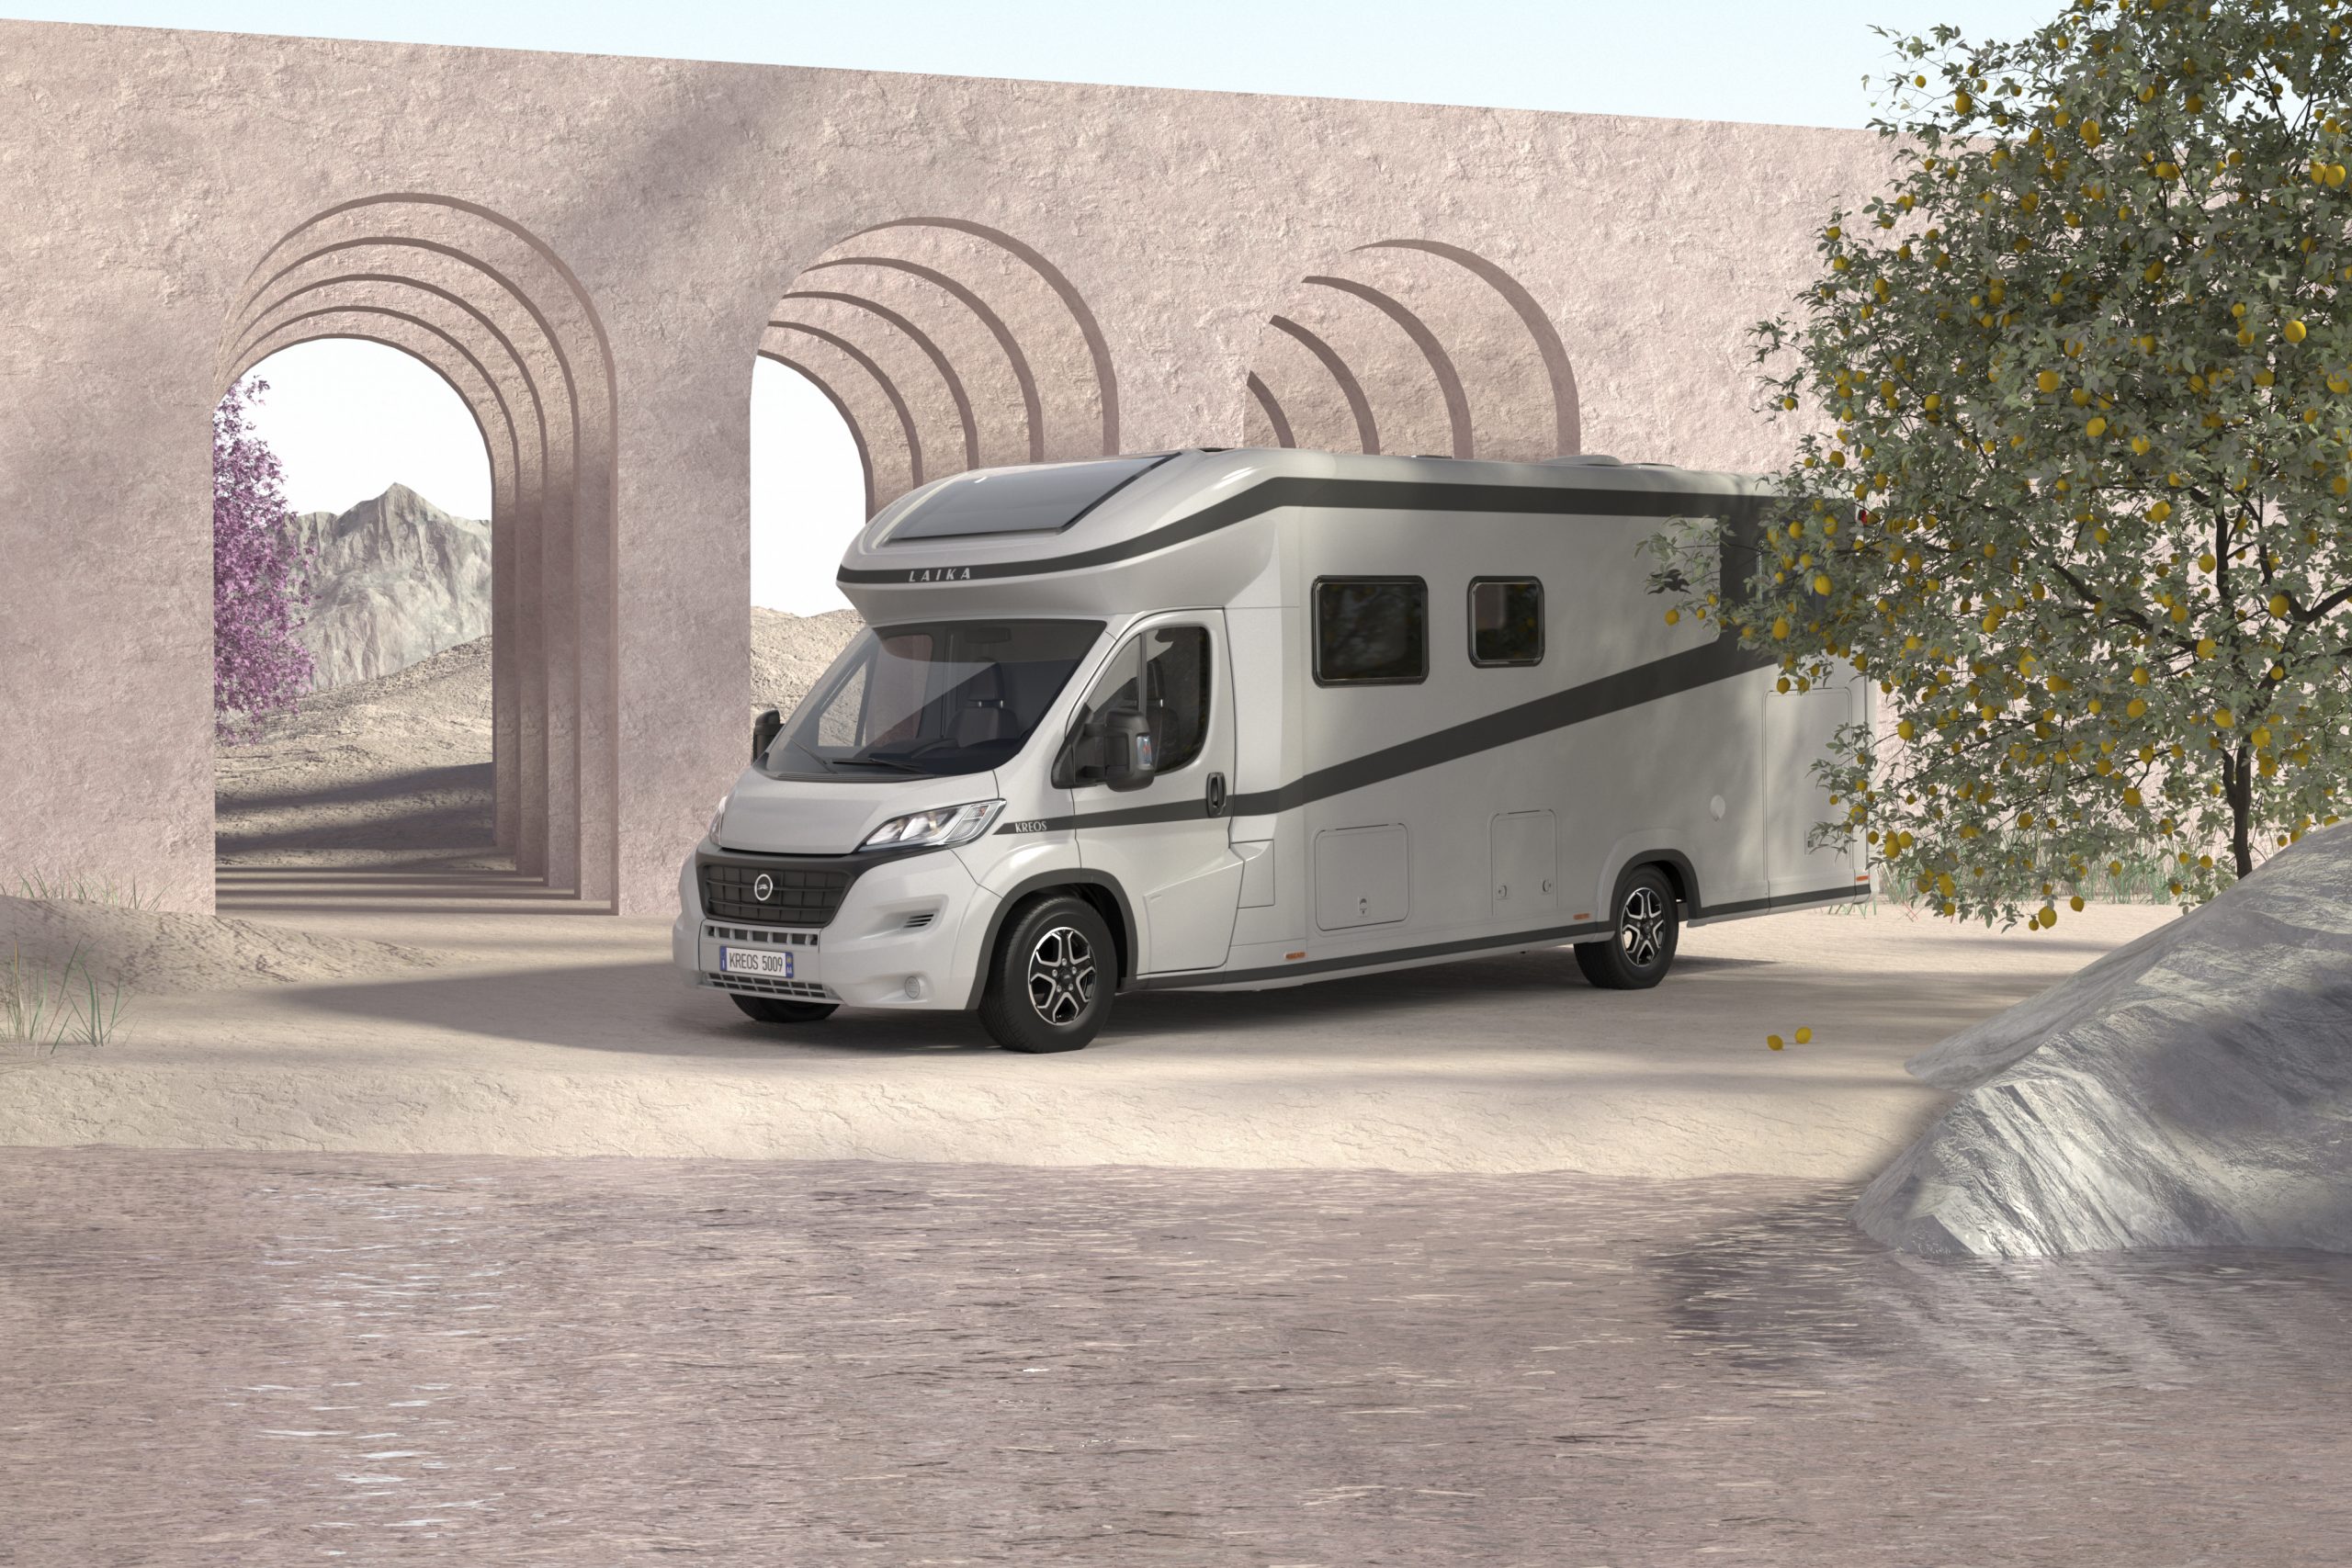 Loquet porte-porte compatible avec Rv camping-car caravane